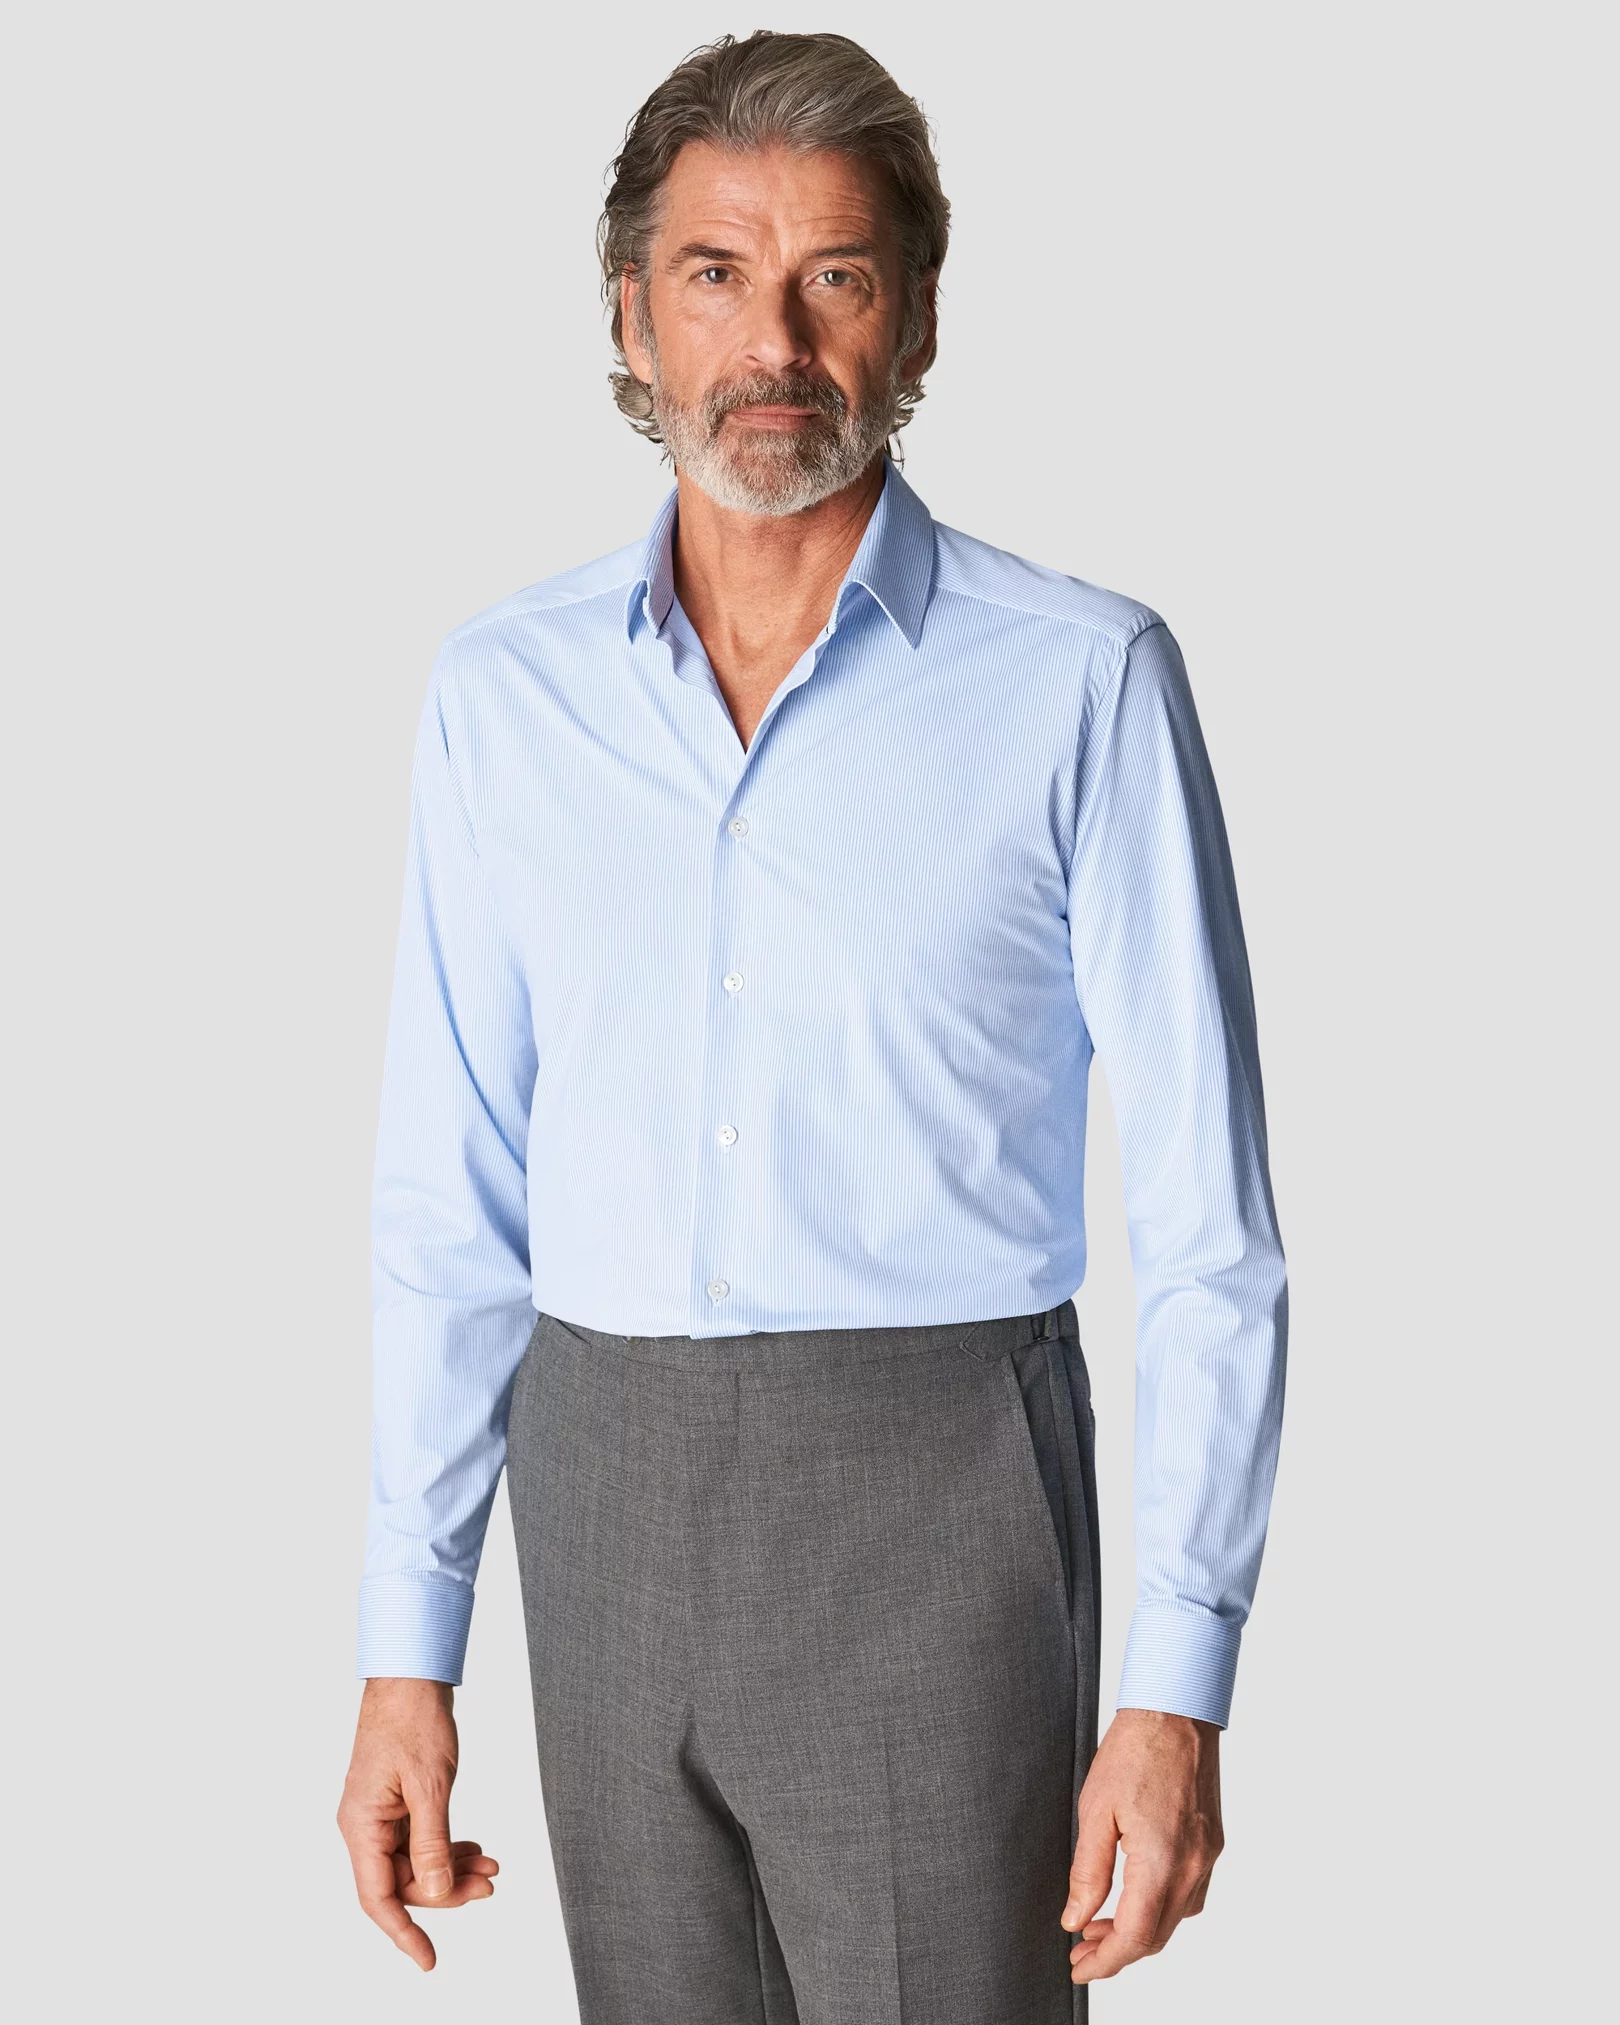 Blue Striped Four-Way Stretch Shirt - Eton